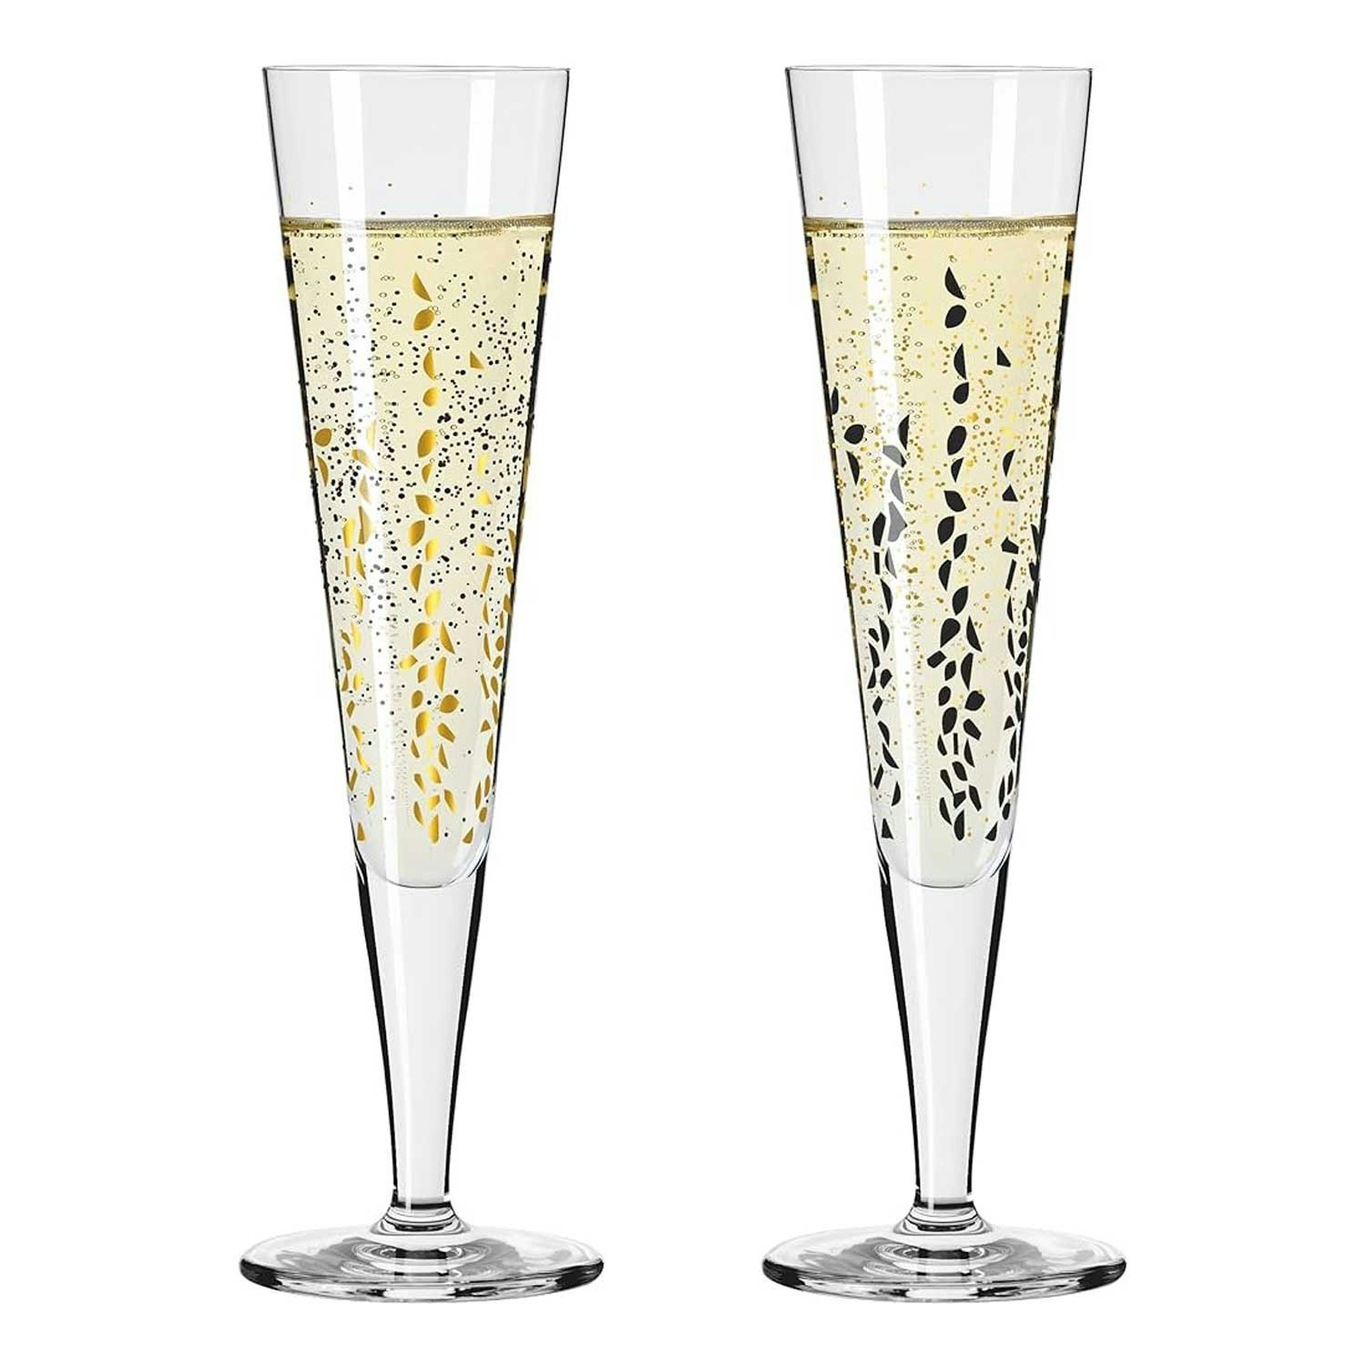 Goldnacht Champagnergläser 2-er Set, H22